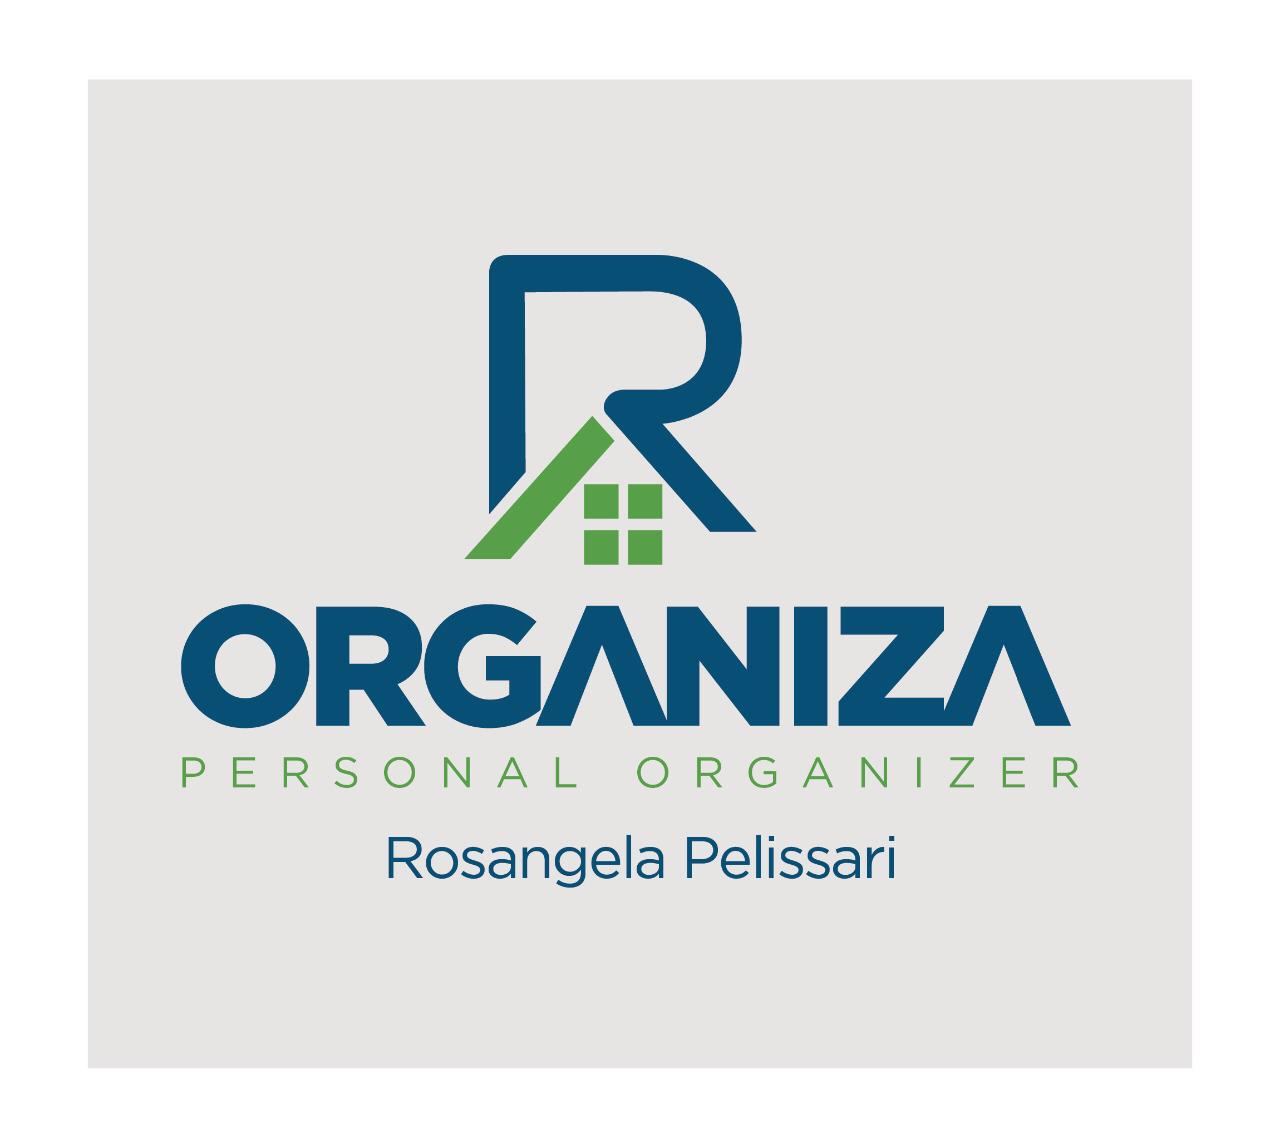 roorganiza logo